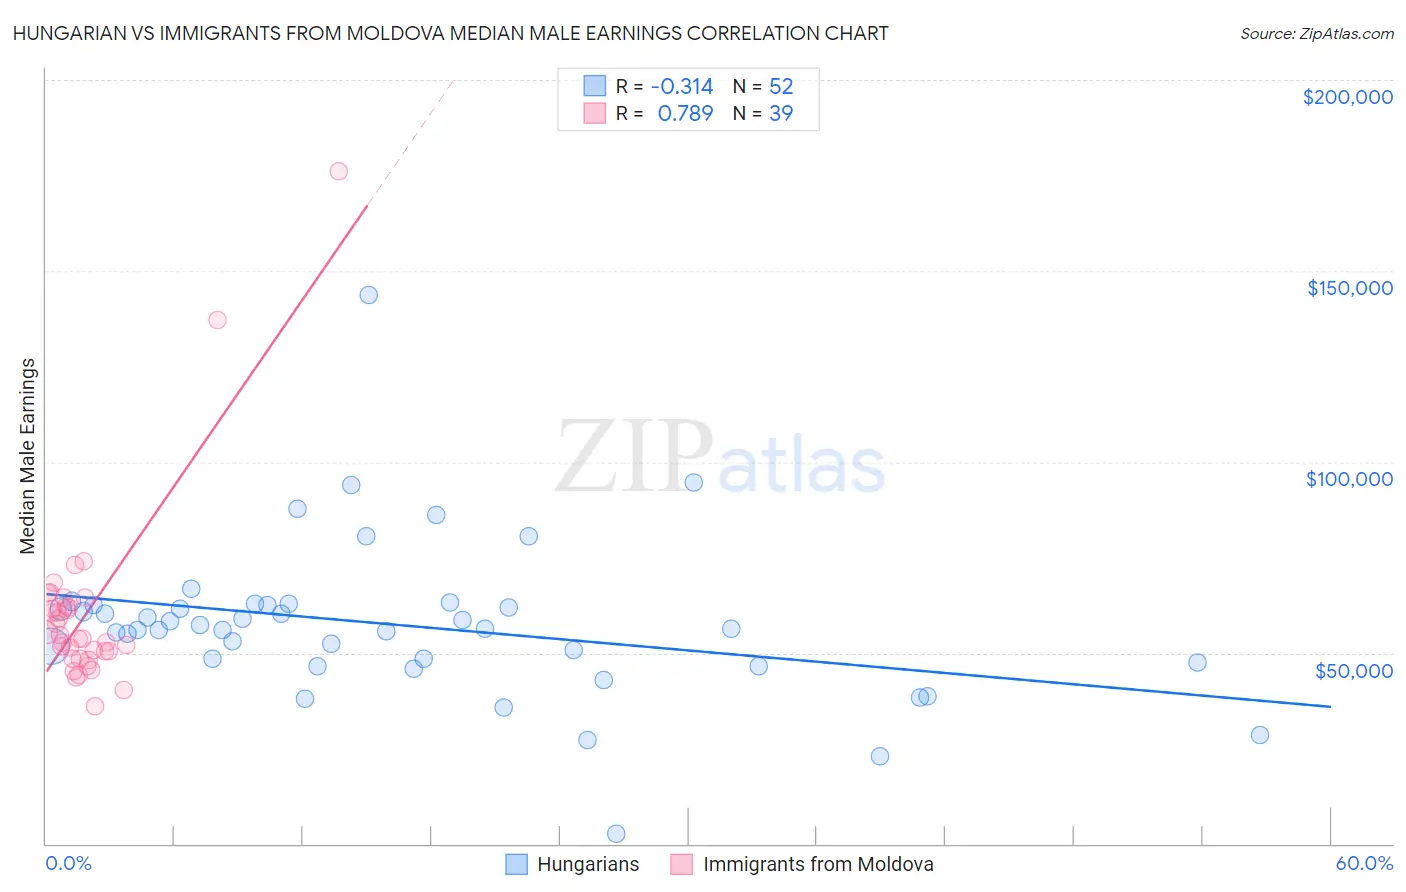 Hungarian vs Immigrants from Moldova Median Male Earnings